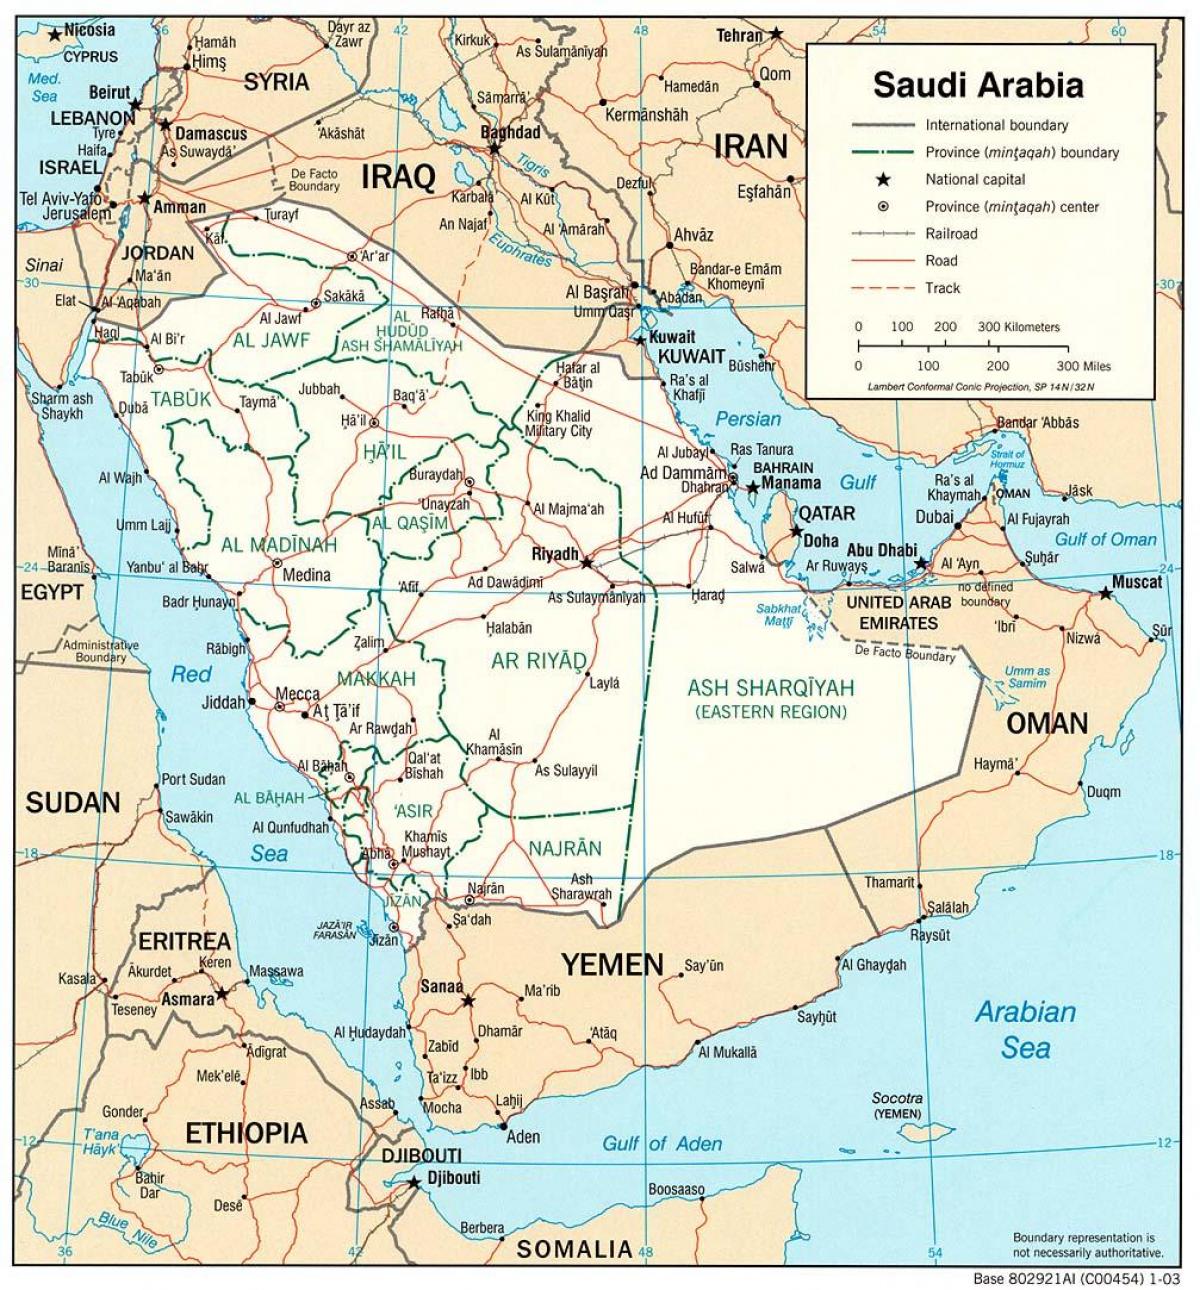 Arabia Saudita la mappa completa